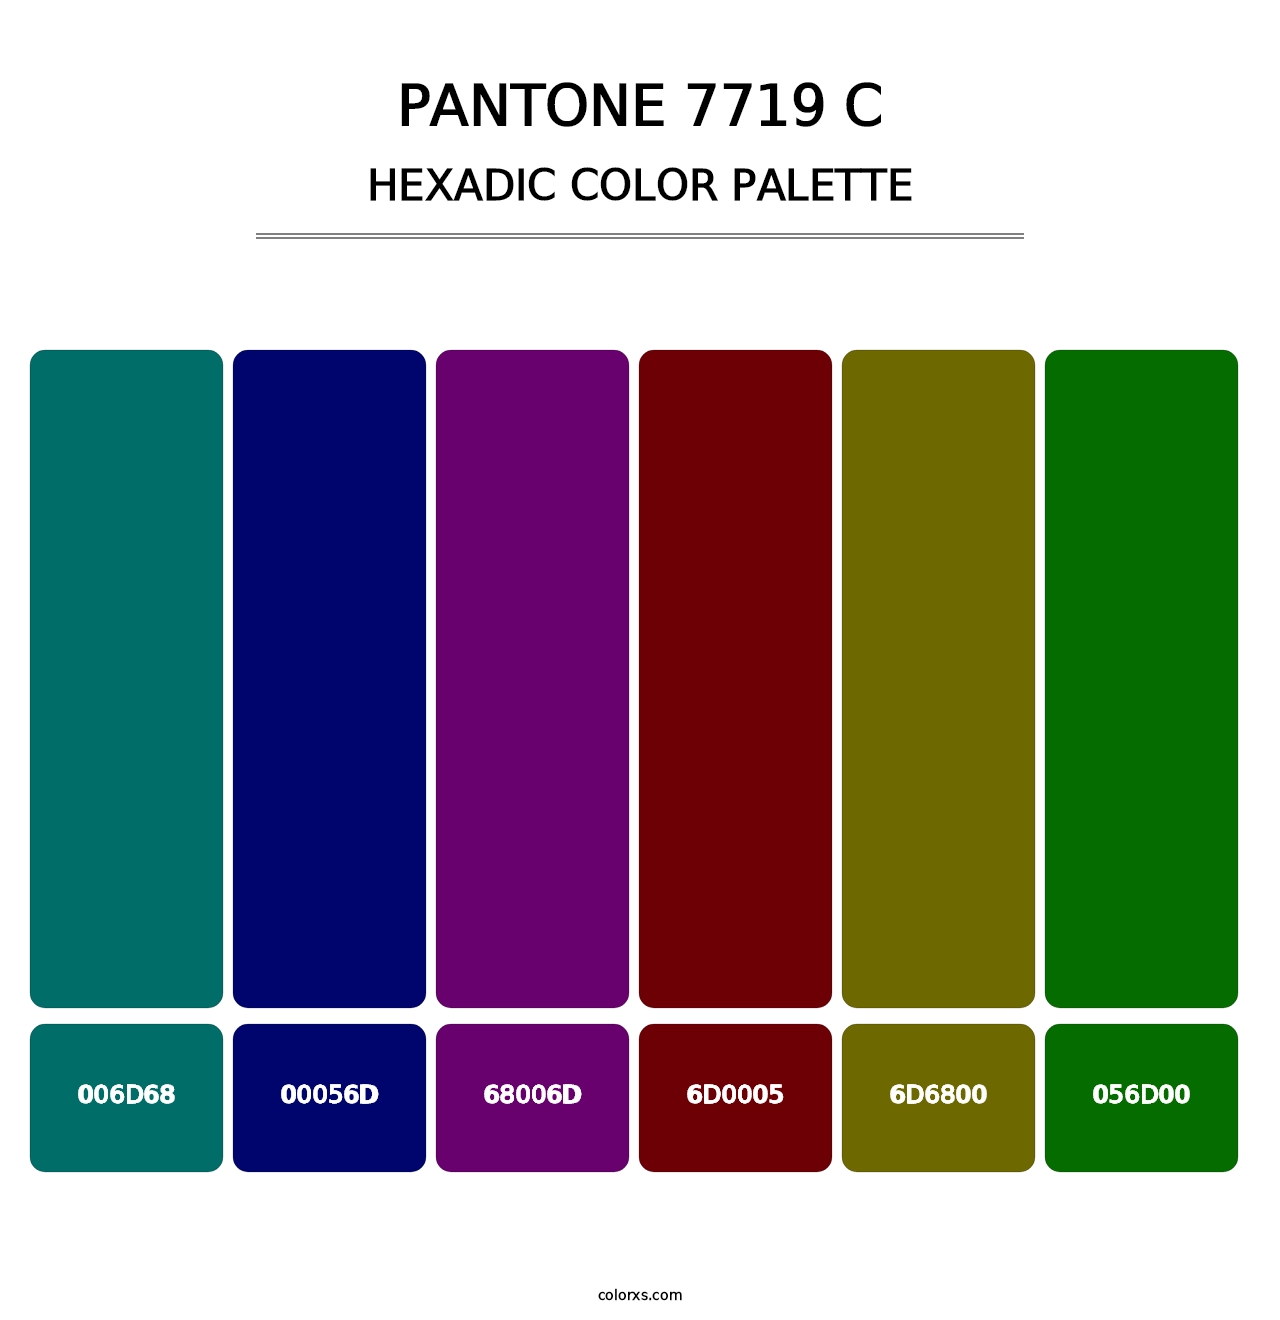 PANTONE 7719 C - Hexadic Color Palette